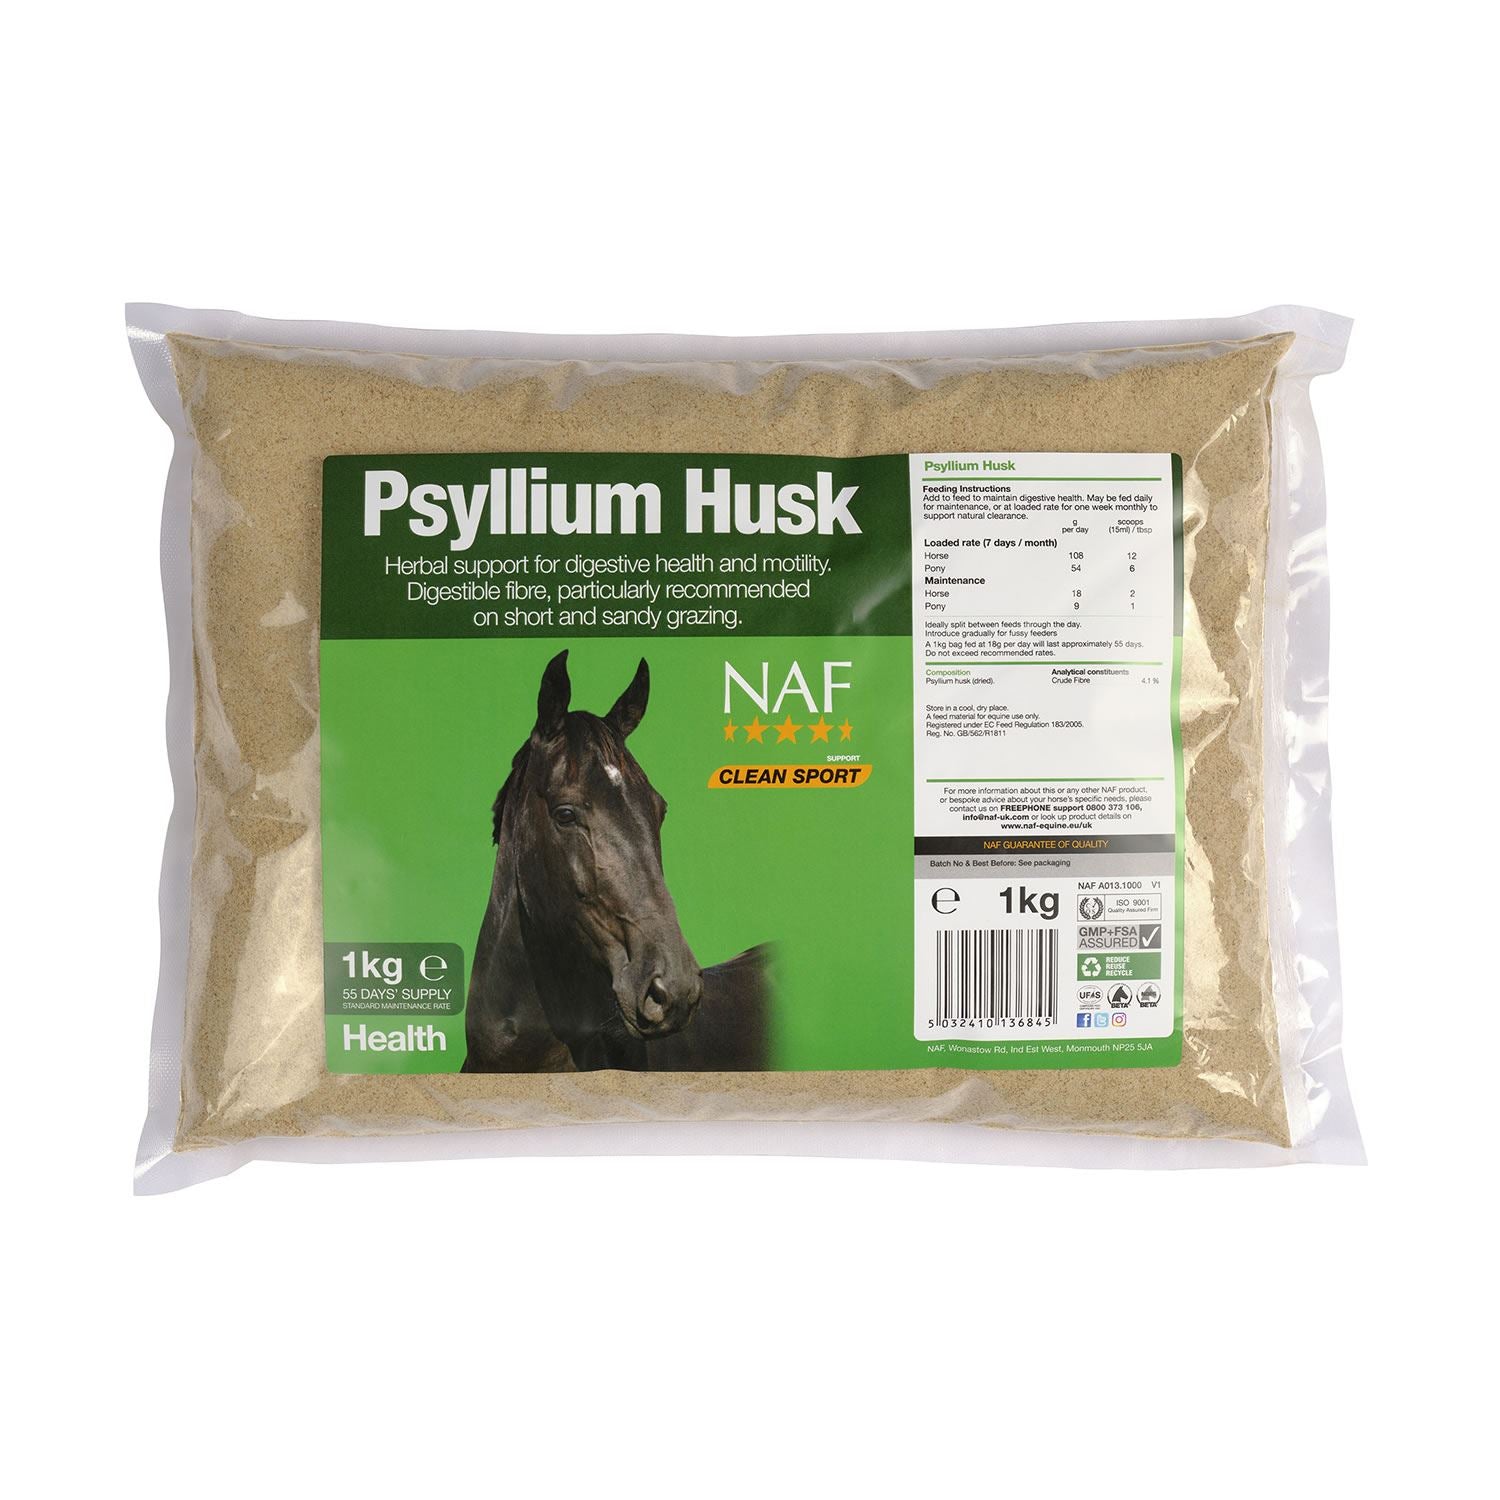 Naf Psyllium Husk - Just Horse Riders